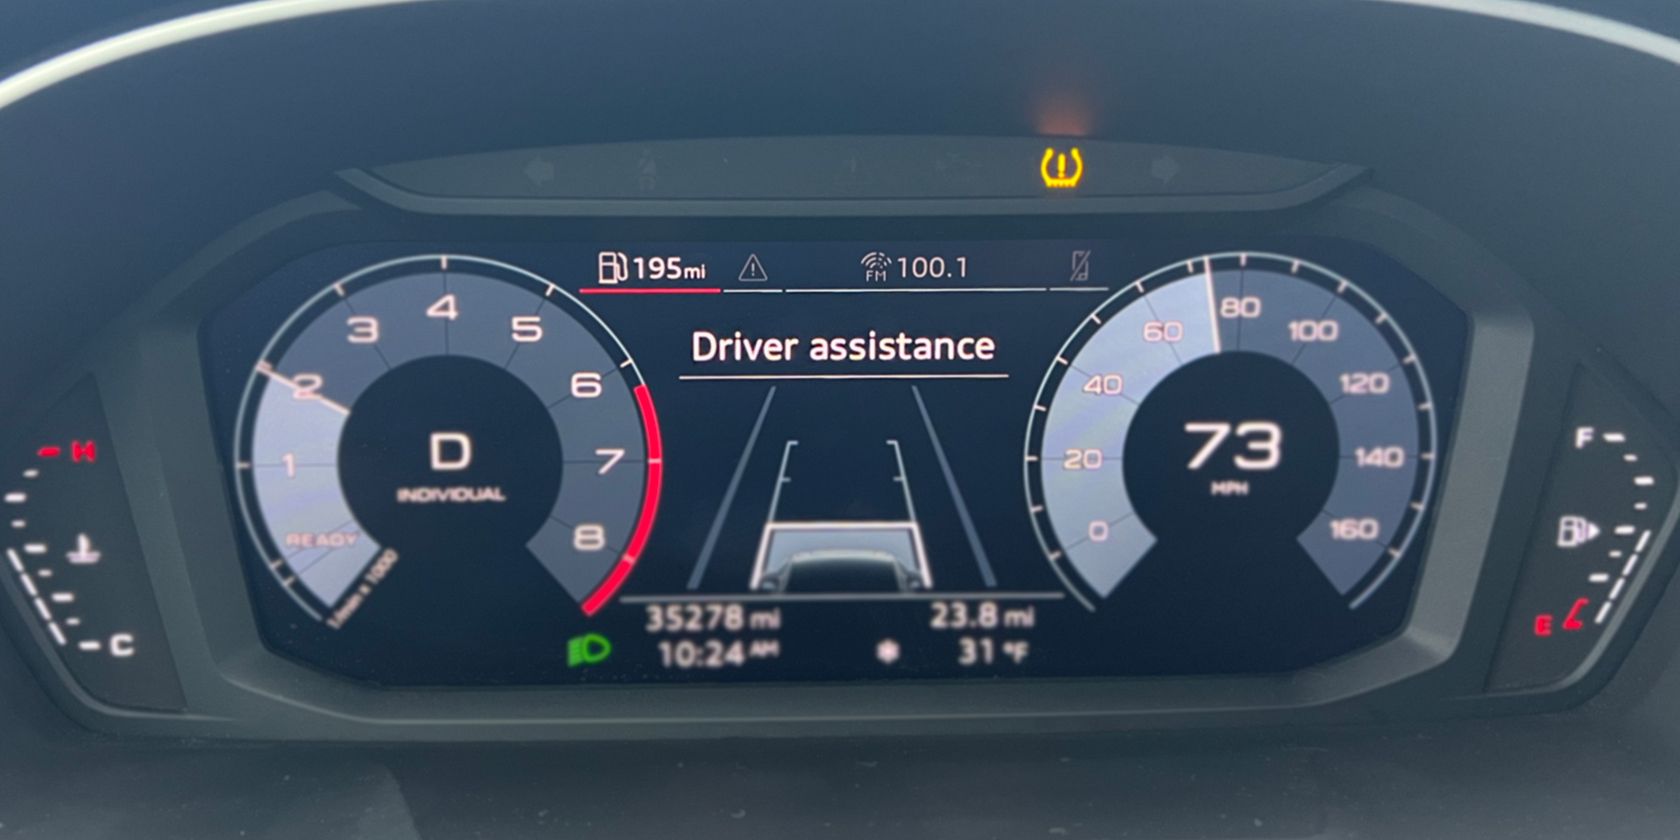 driver assistance panel on audi dash